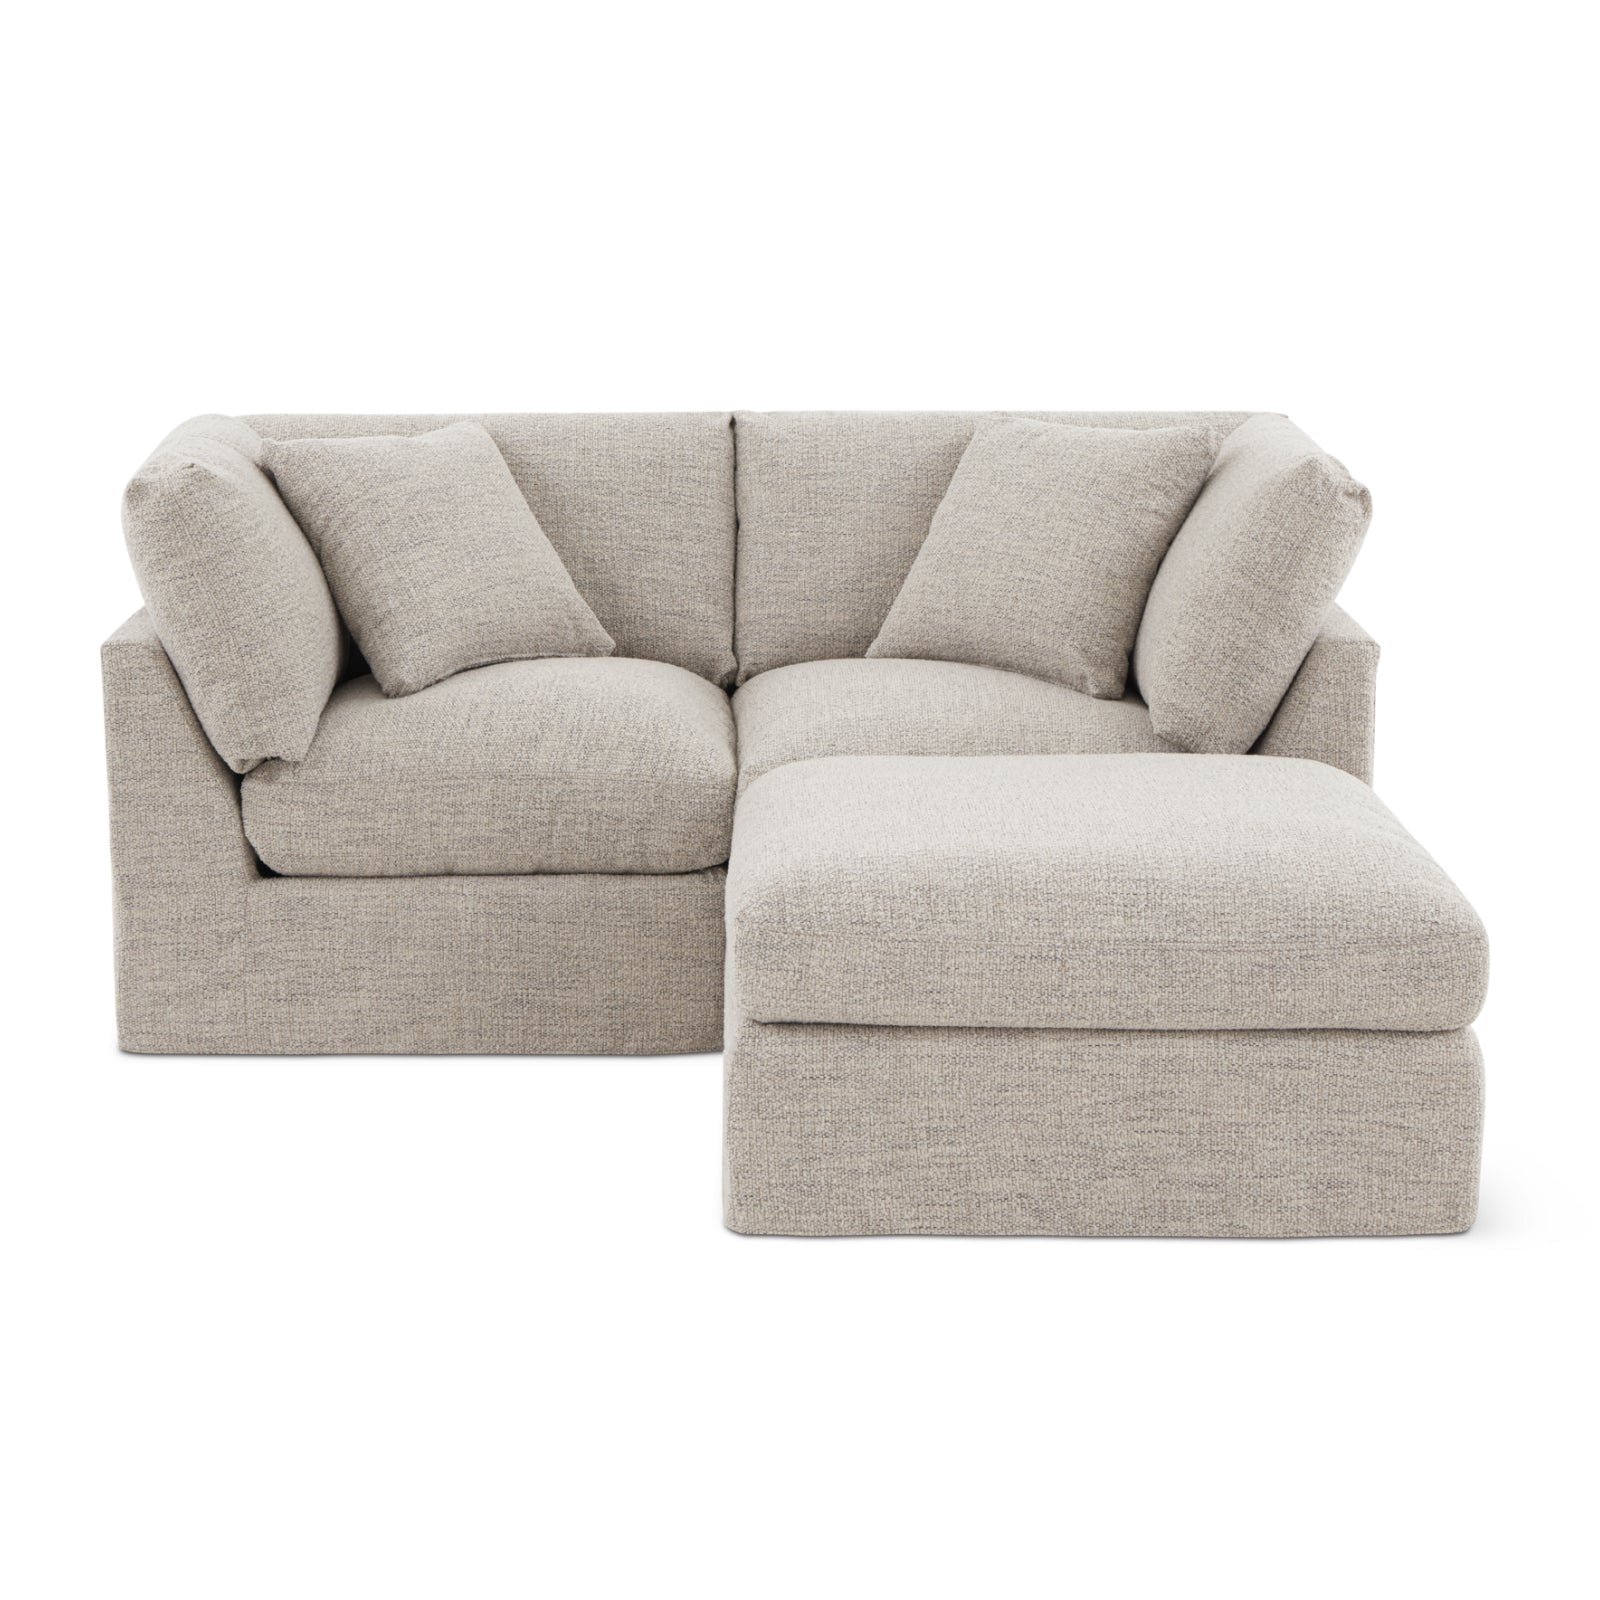 Get Together™ 2-Piece Modular Sofa, Standard, Oatmeal - Image 10